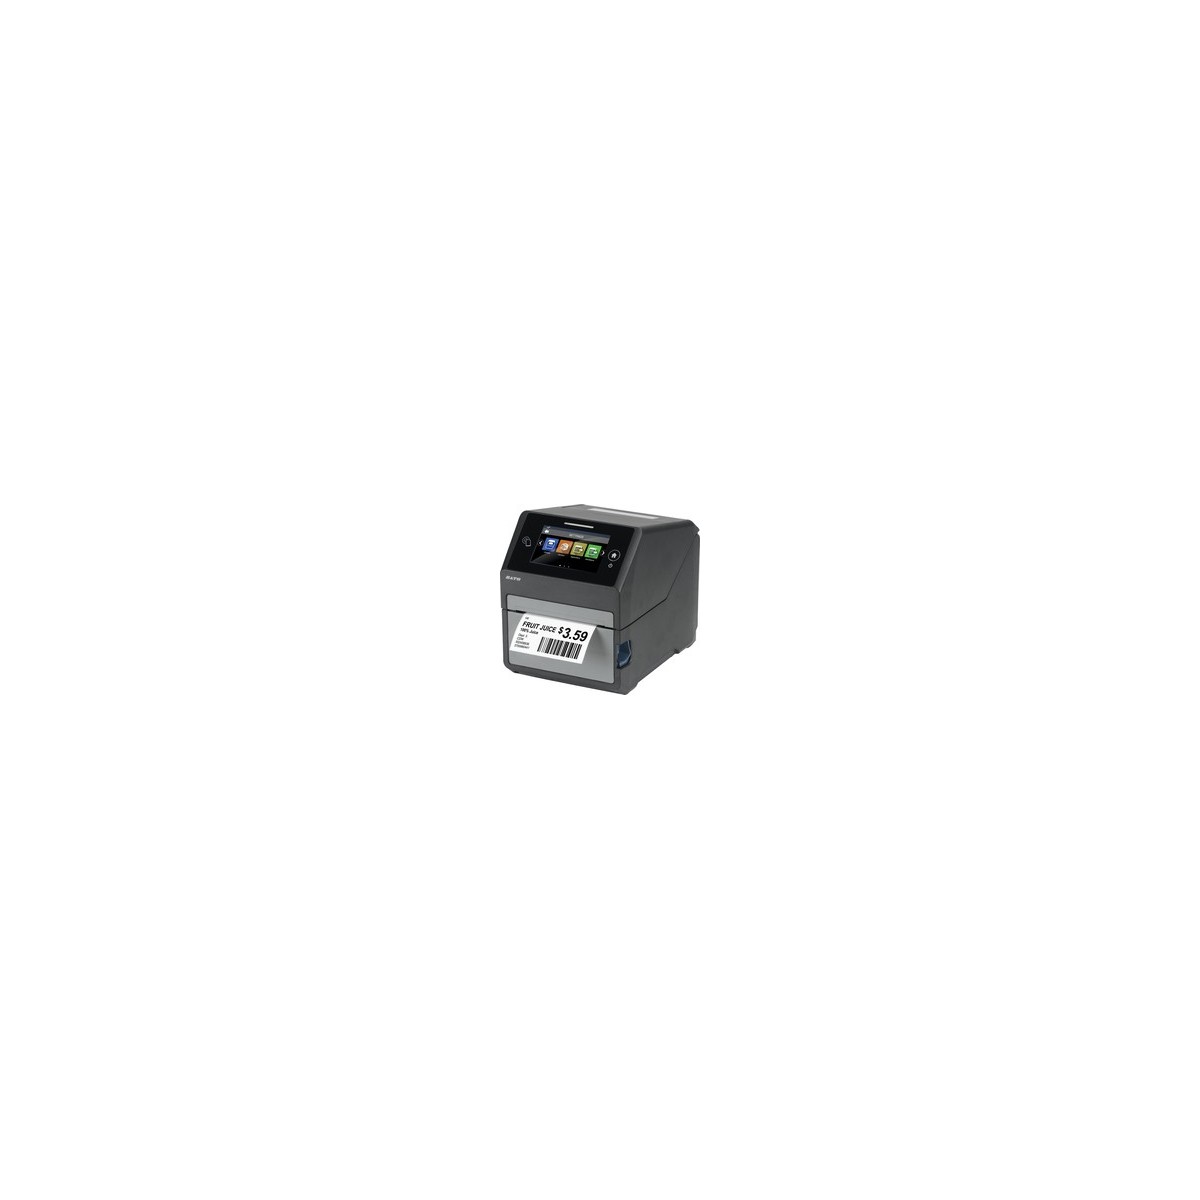 SATO CT412LX TT305 - USBLAN - EU-UK - Direct thermal - Thermal transfer - POS printer - 305 x 305 DPI - 6 ips - 0.08 - 0.19 µm -